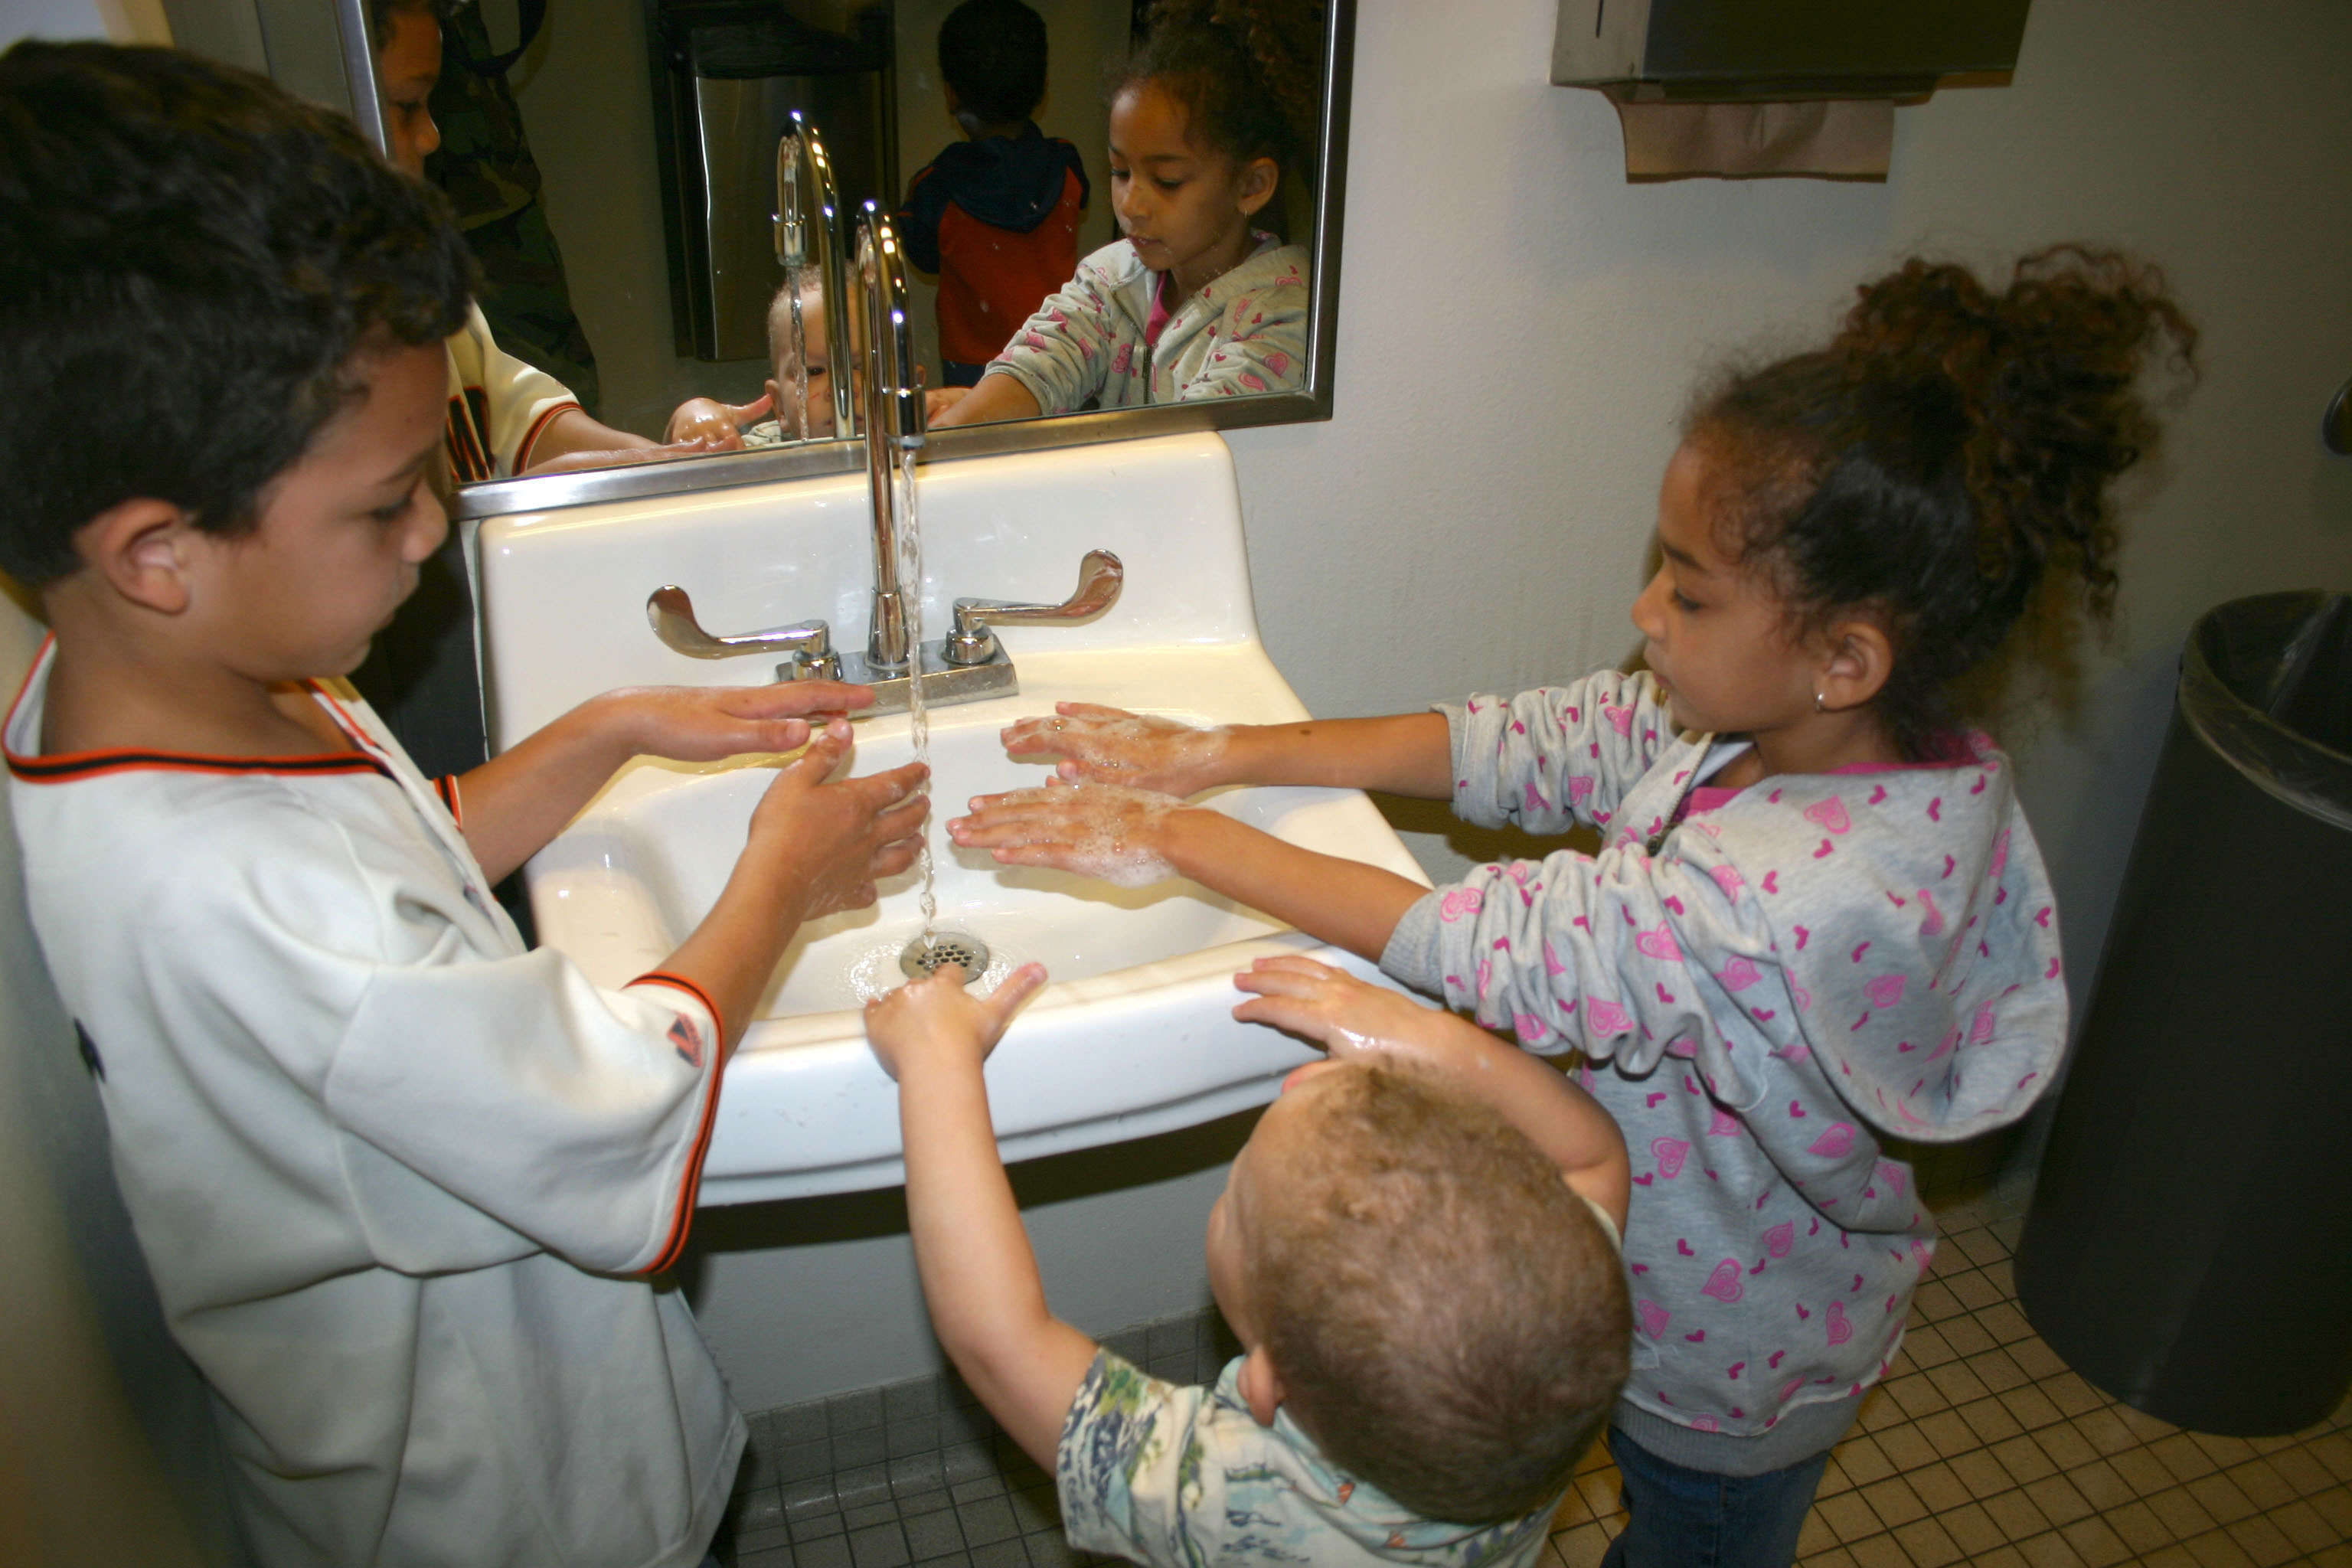 Three children washing their hands together in a bathroom sink.